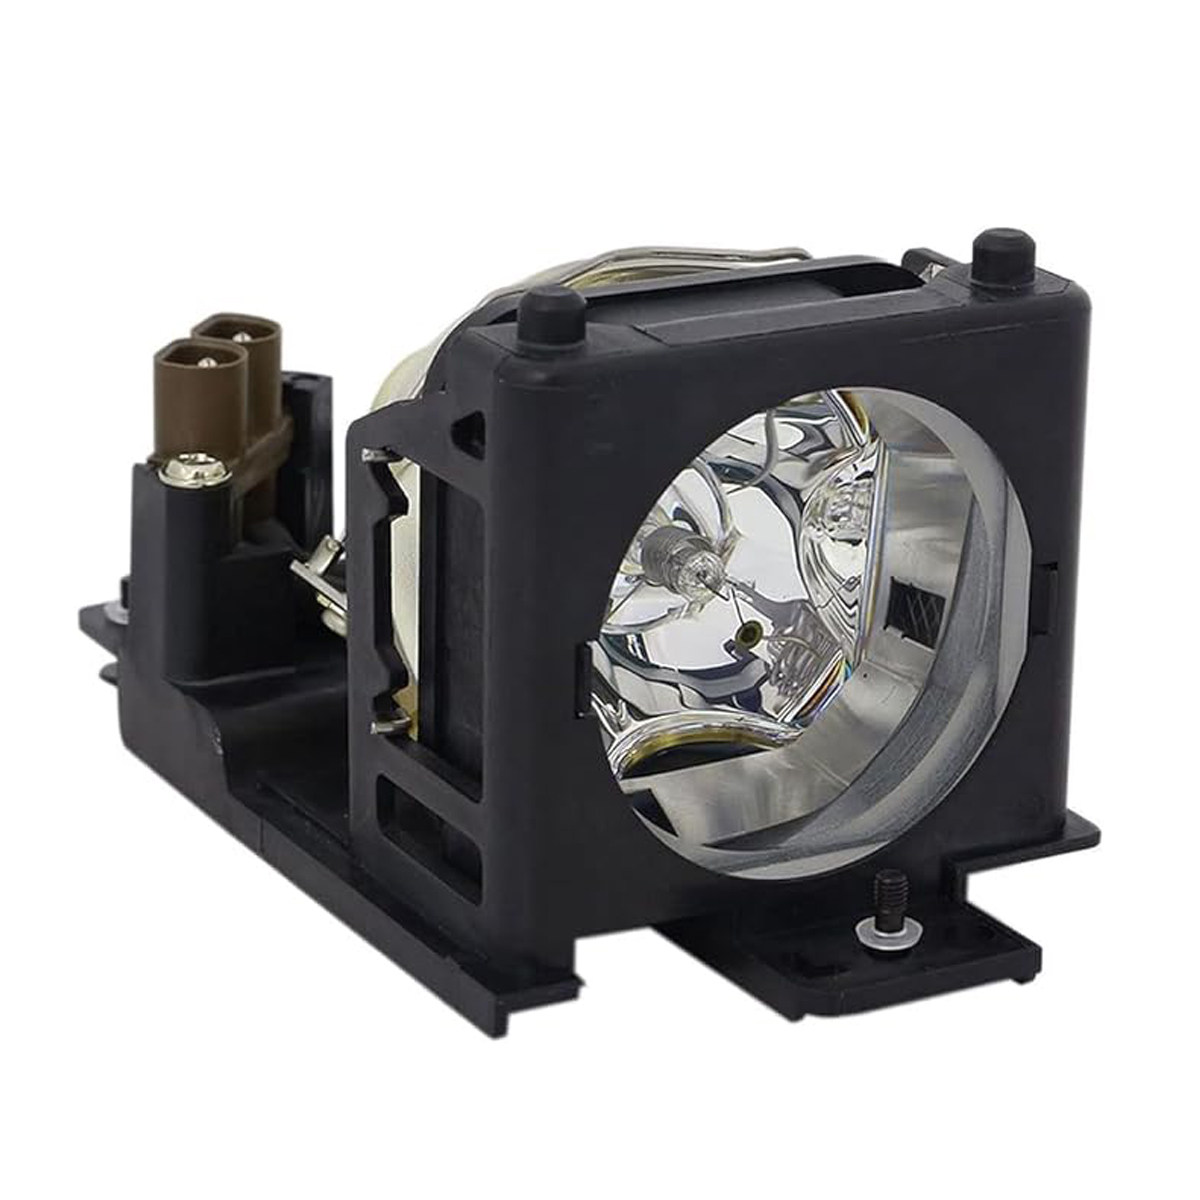 Replacement Projector lamp RLC-004 For PJ400 PJ400-2 PJ452L PJ452-2